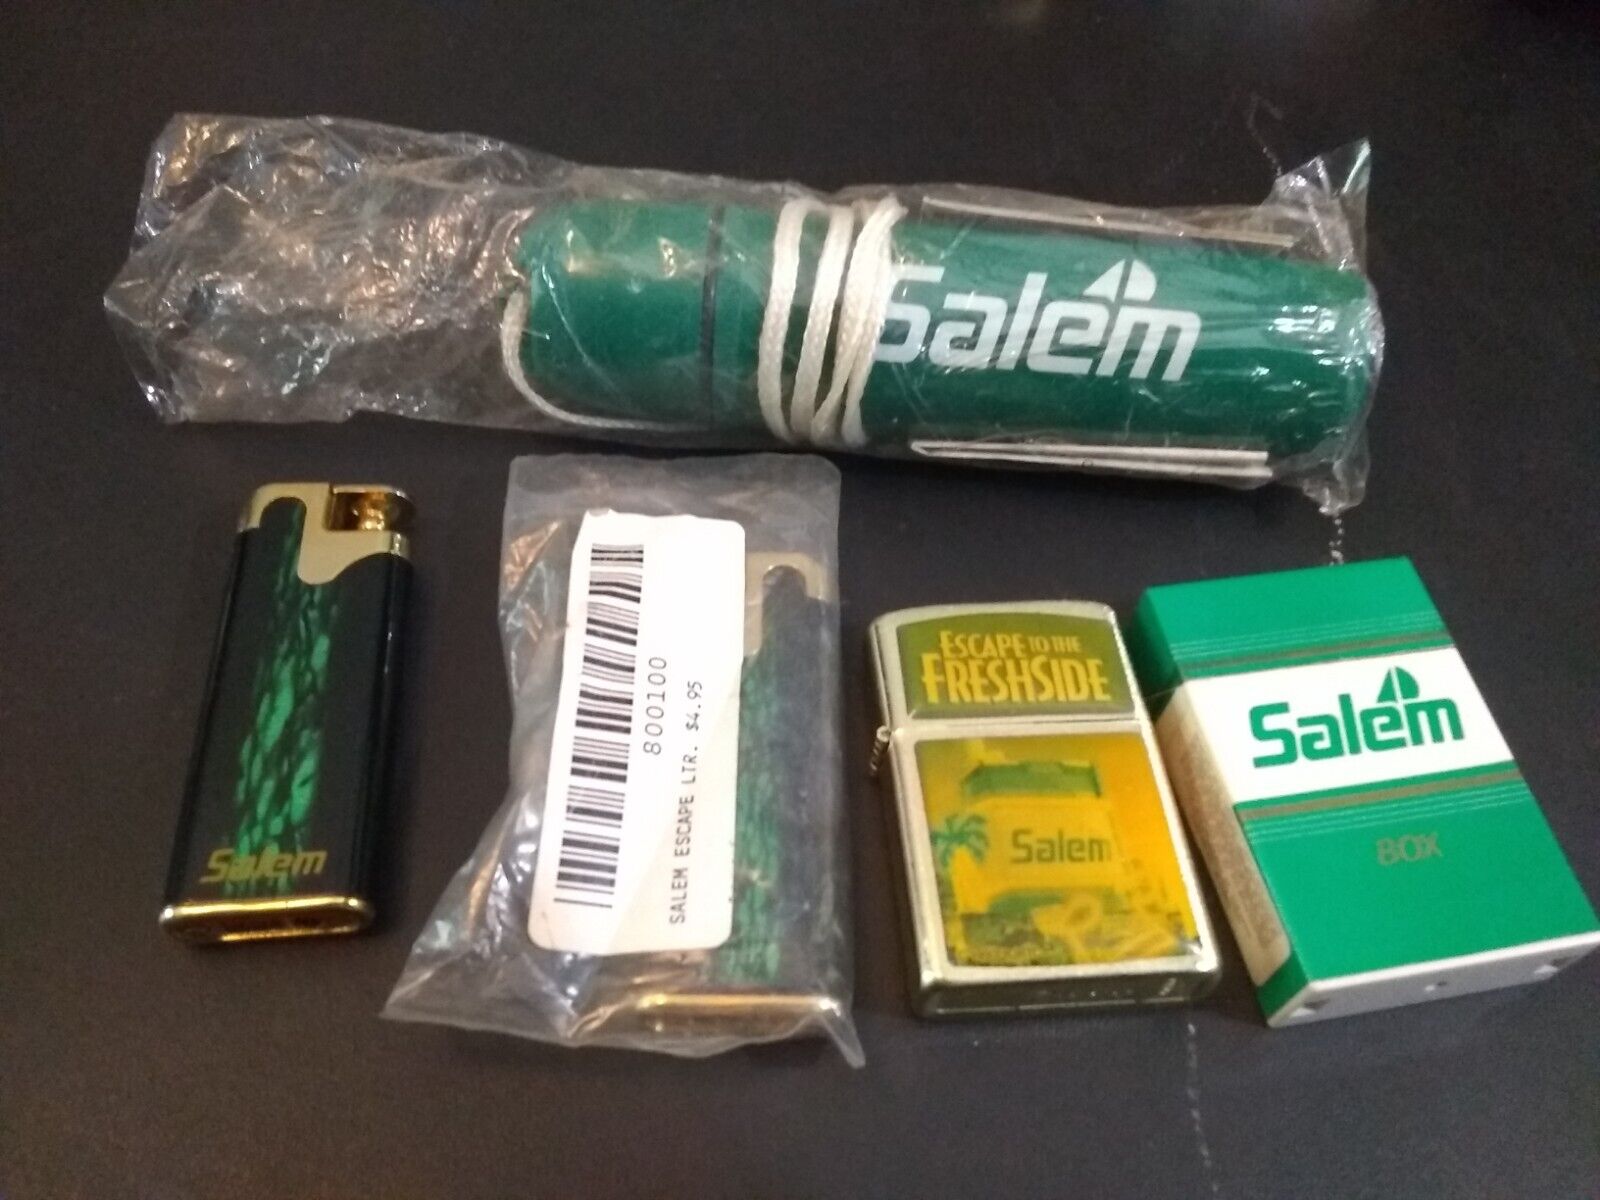 Lot of 5 Advertising/Promotional Tobacco Cigarette Lighters, Winston,Salem,Skoal